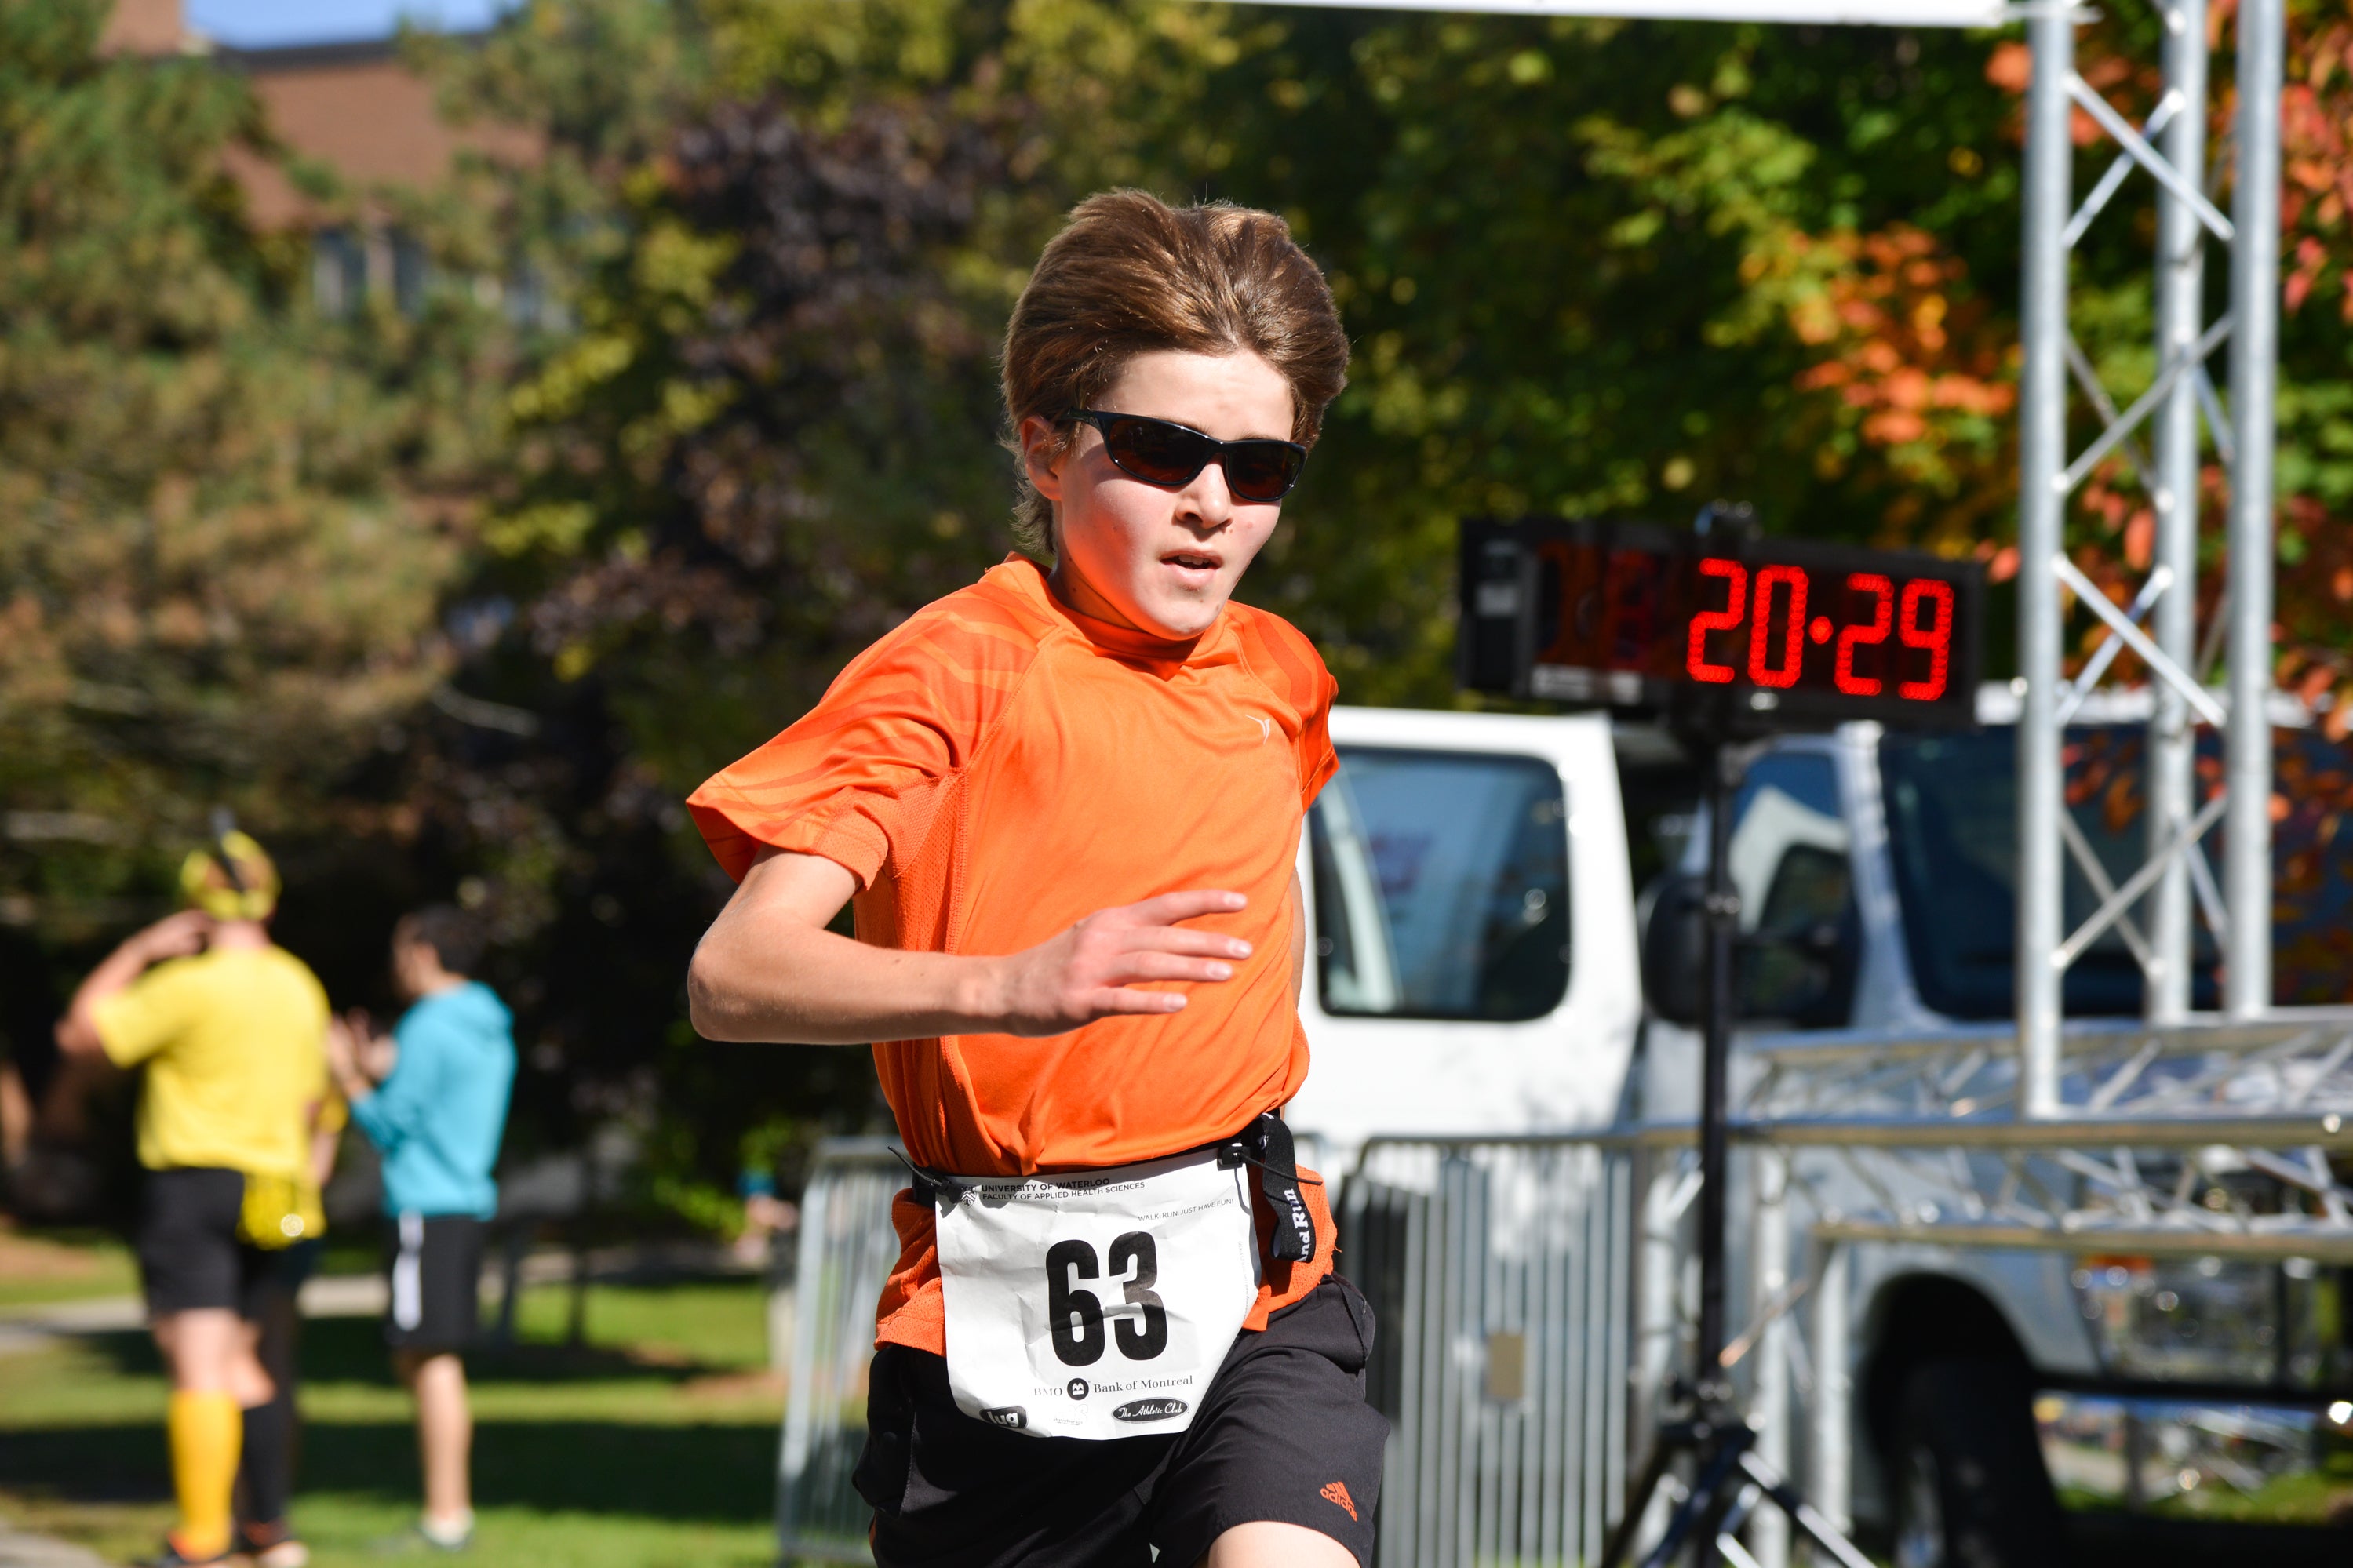 Child Participant passing the finish line